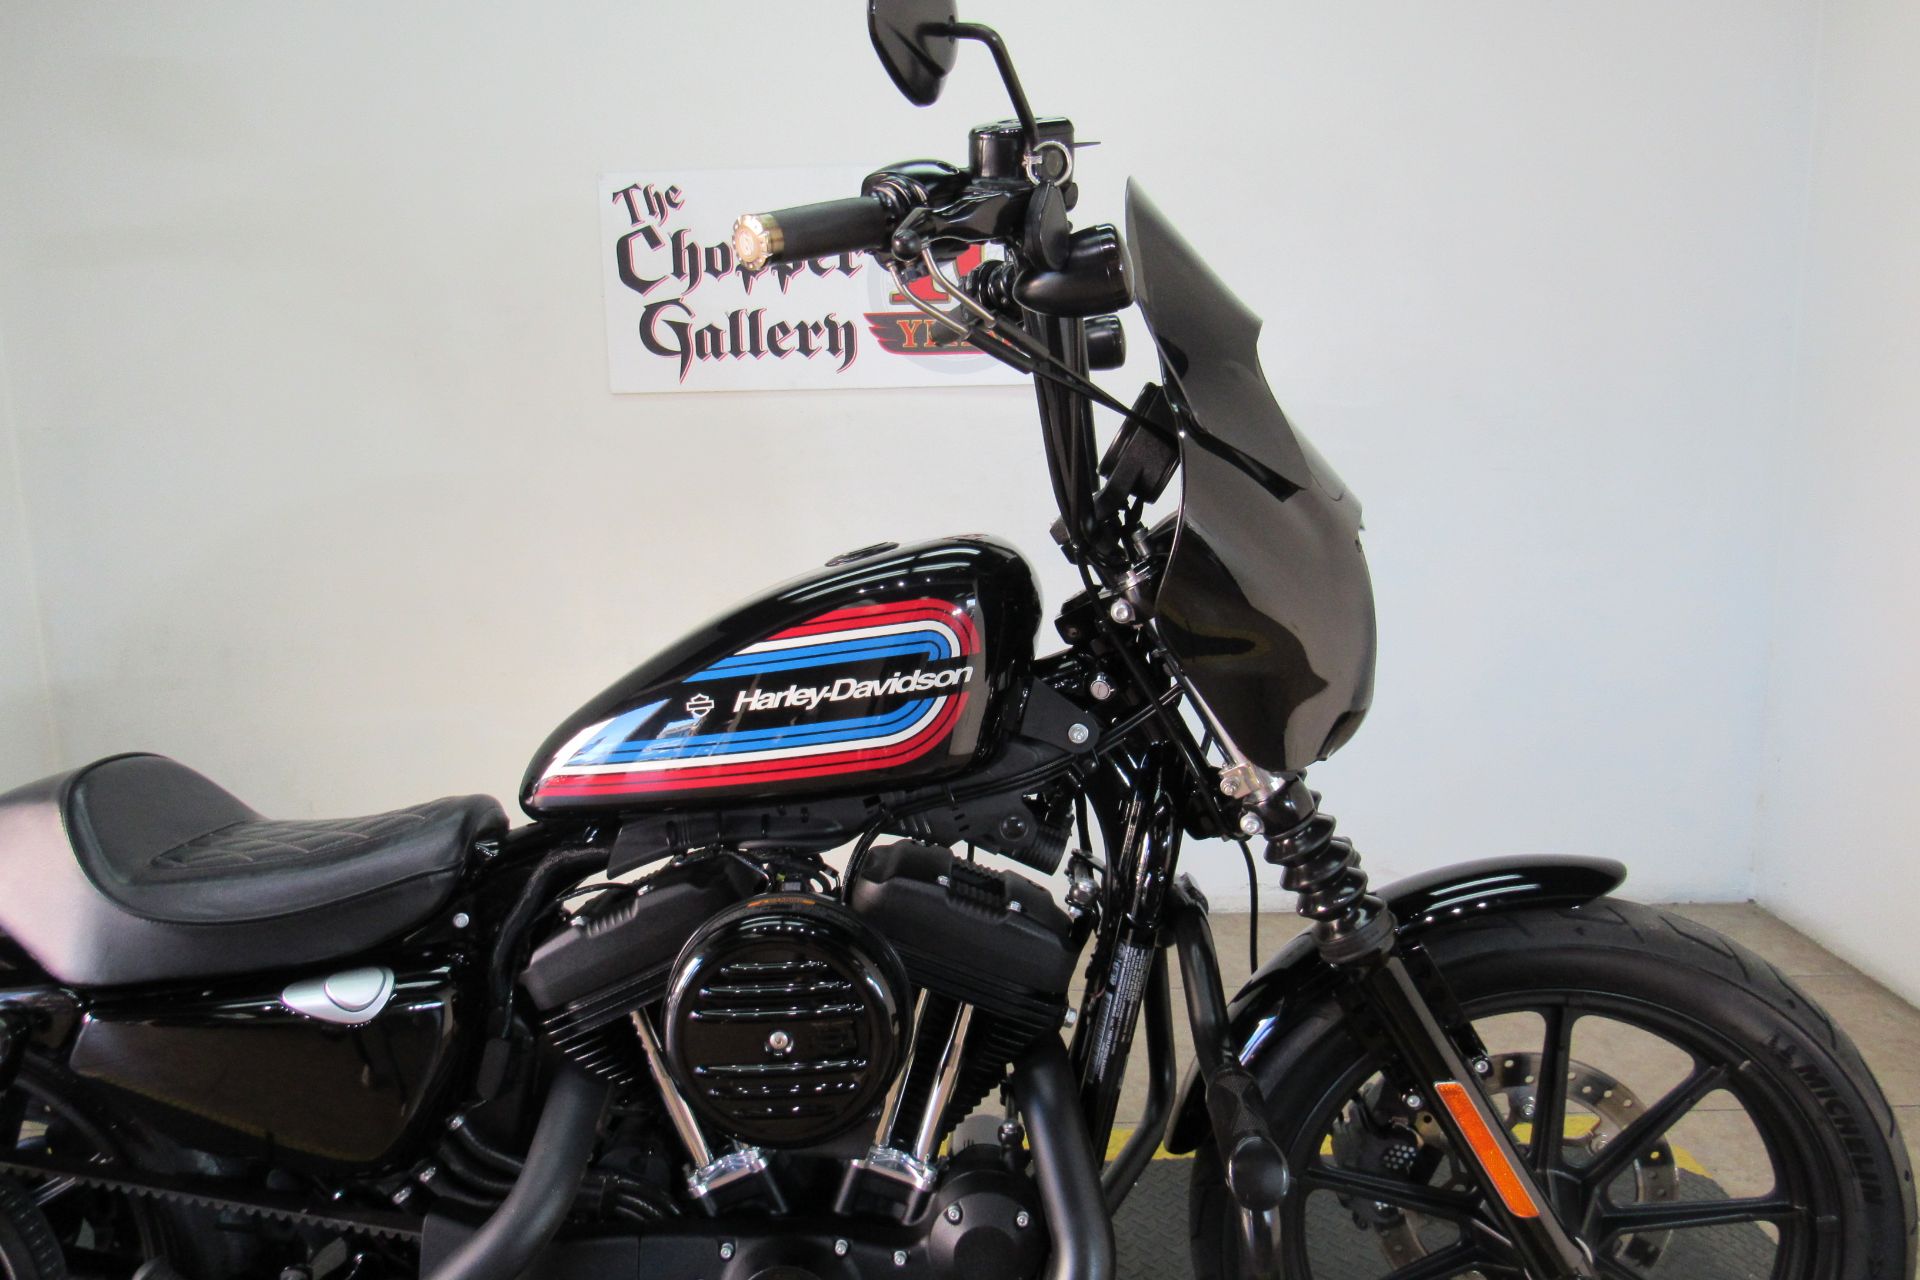 2020 Harley-Davidson Iron 1200™ in Temecula, California - Photo 5